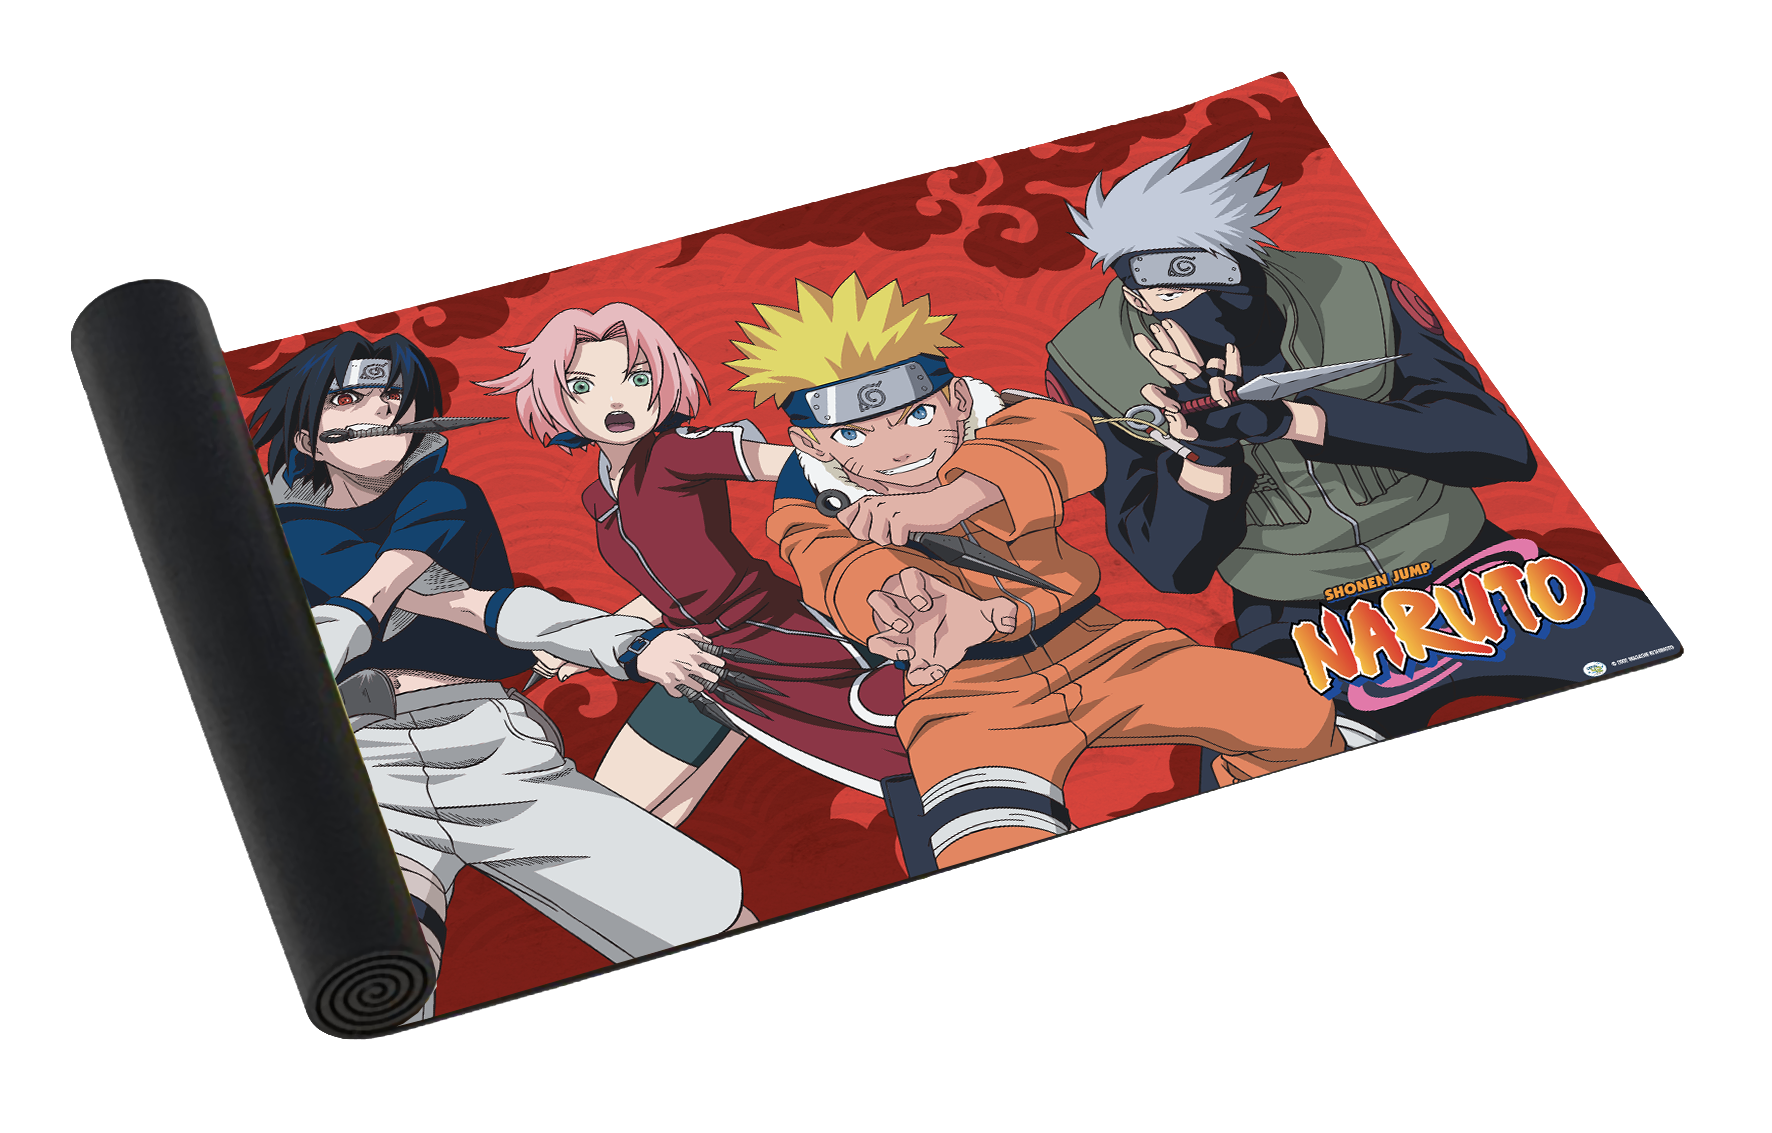 Naruto Playmat - Kakashi Team - Bards & Cards